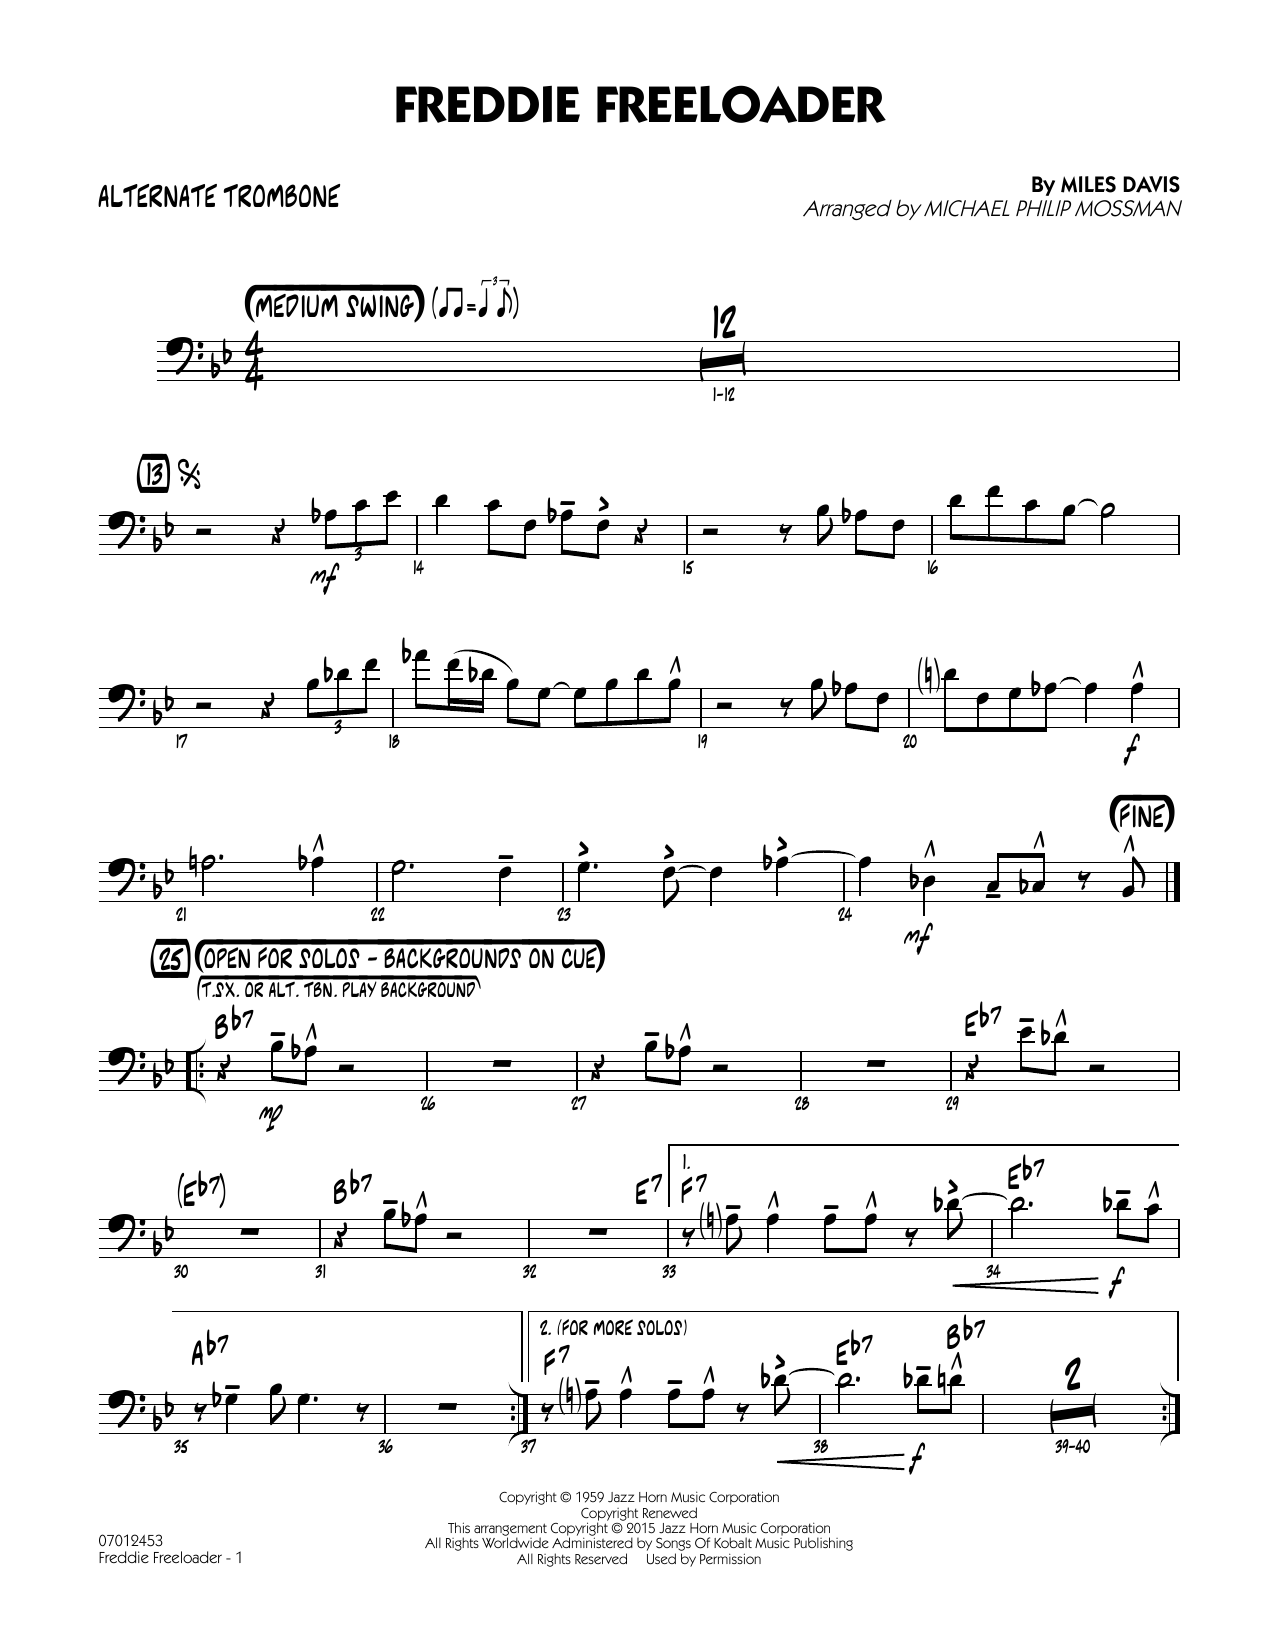 Michael Philip Mossman Freddie Freeloader - Alternate Trombone sheet music notes and chords. Download Printable PDF.